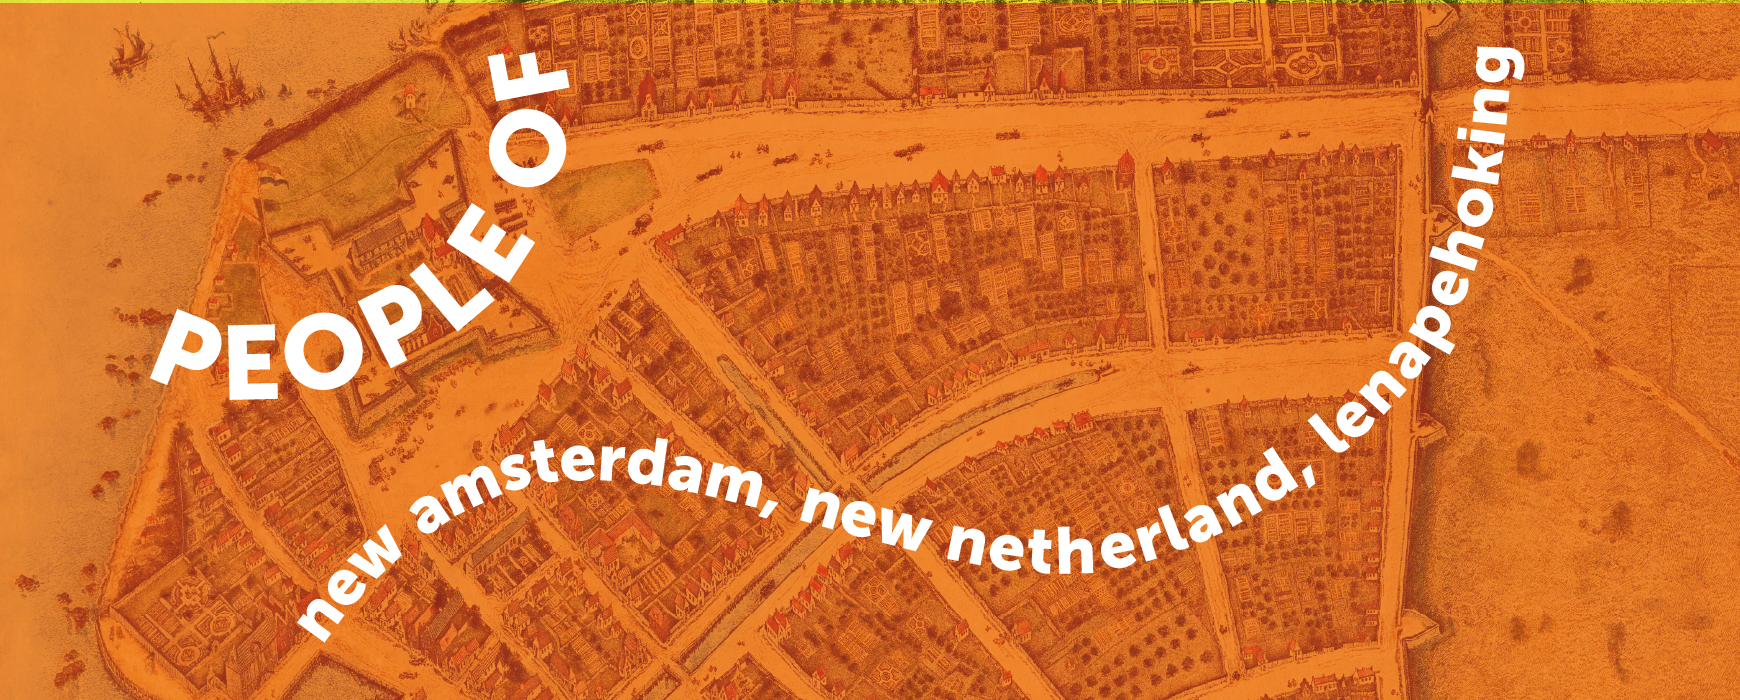 new amsterdam history